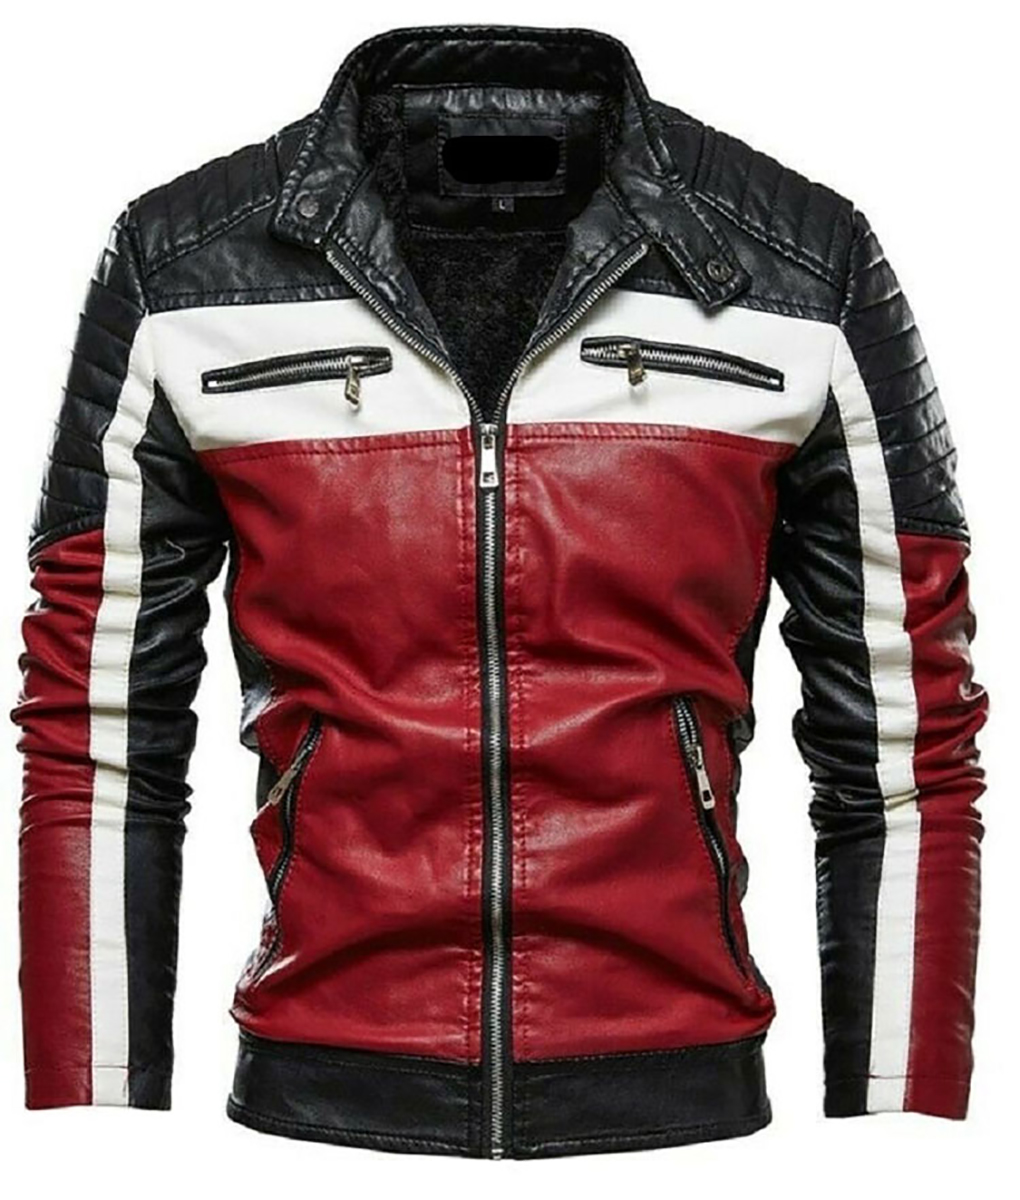 Men’s Motorcycle Leather Jacket (3)